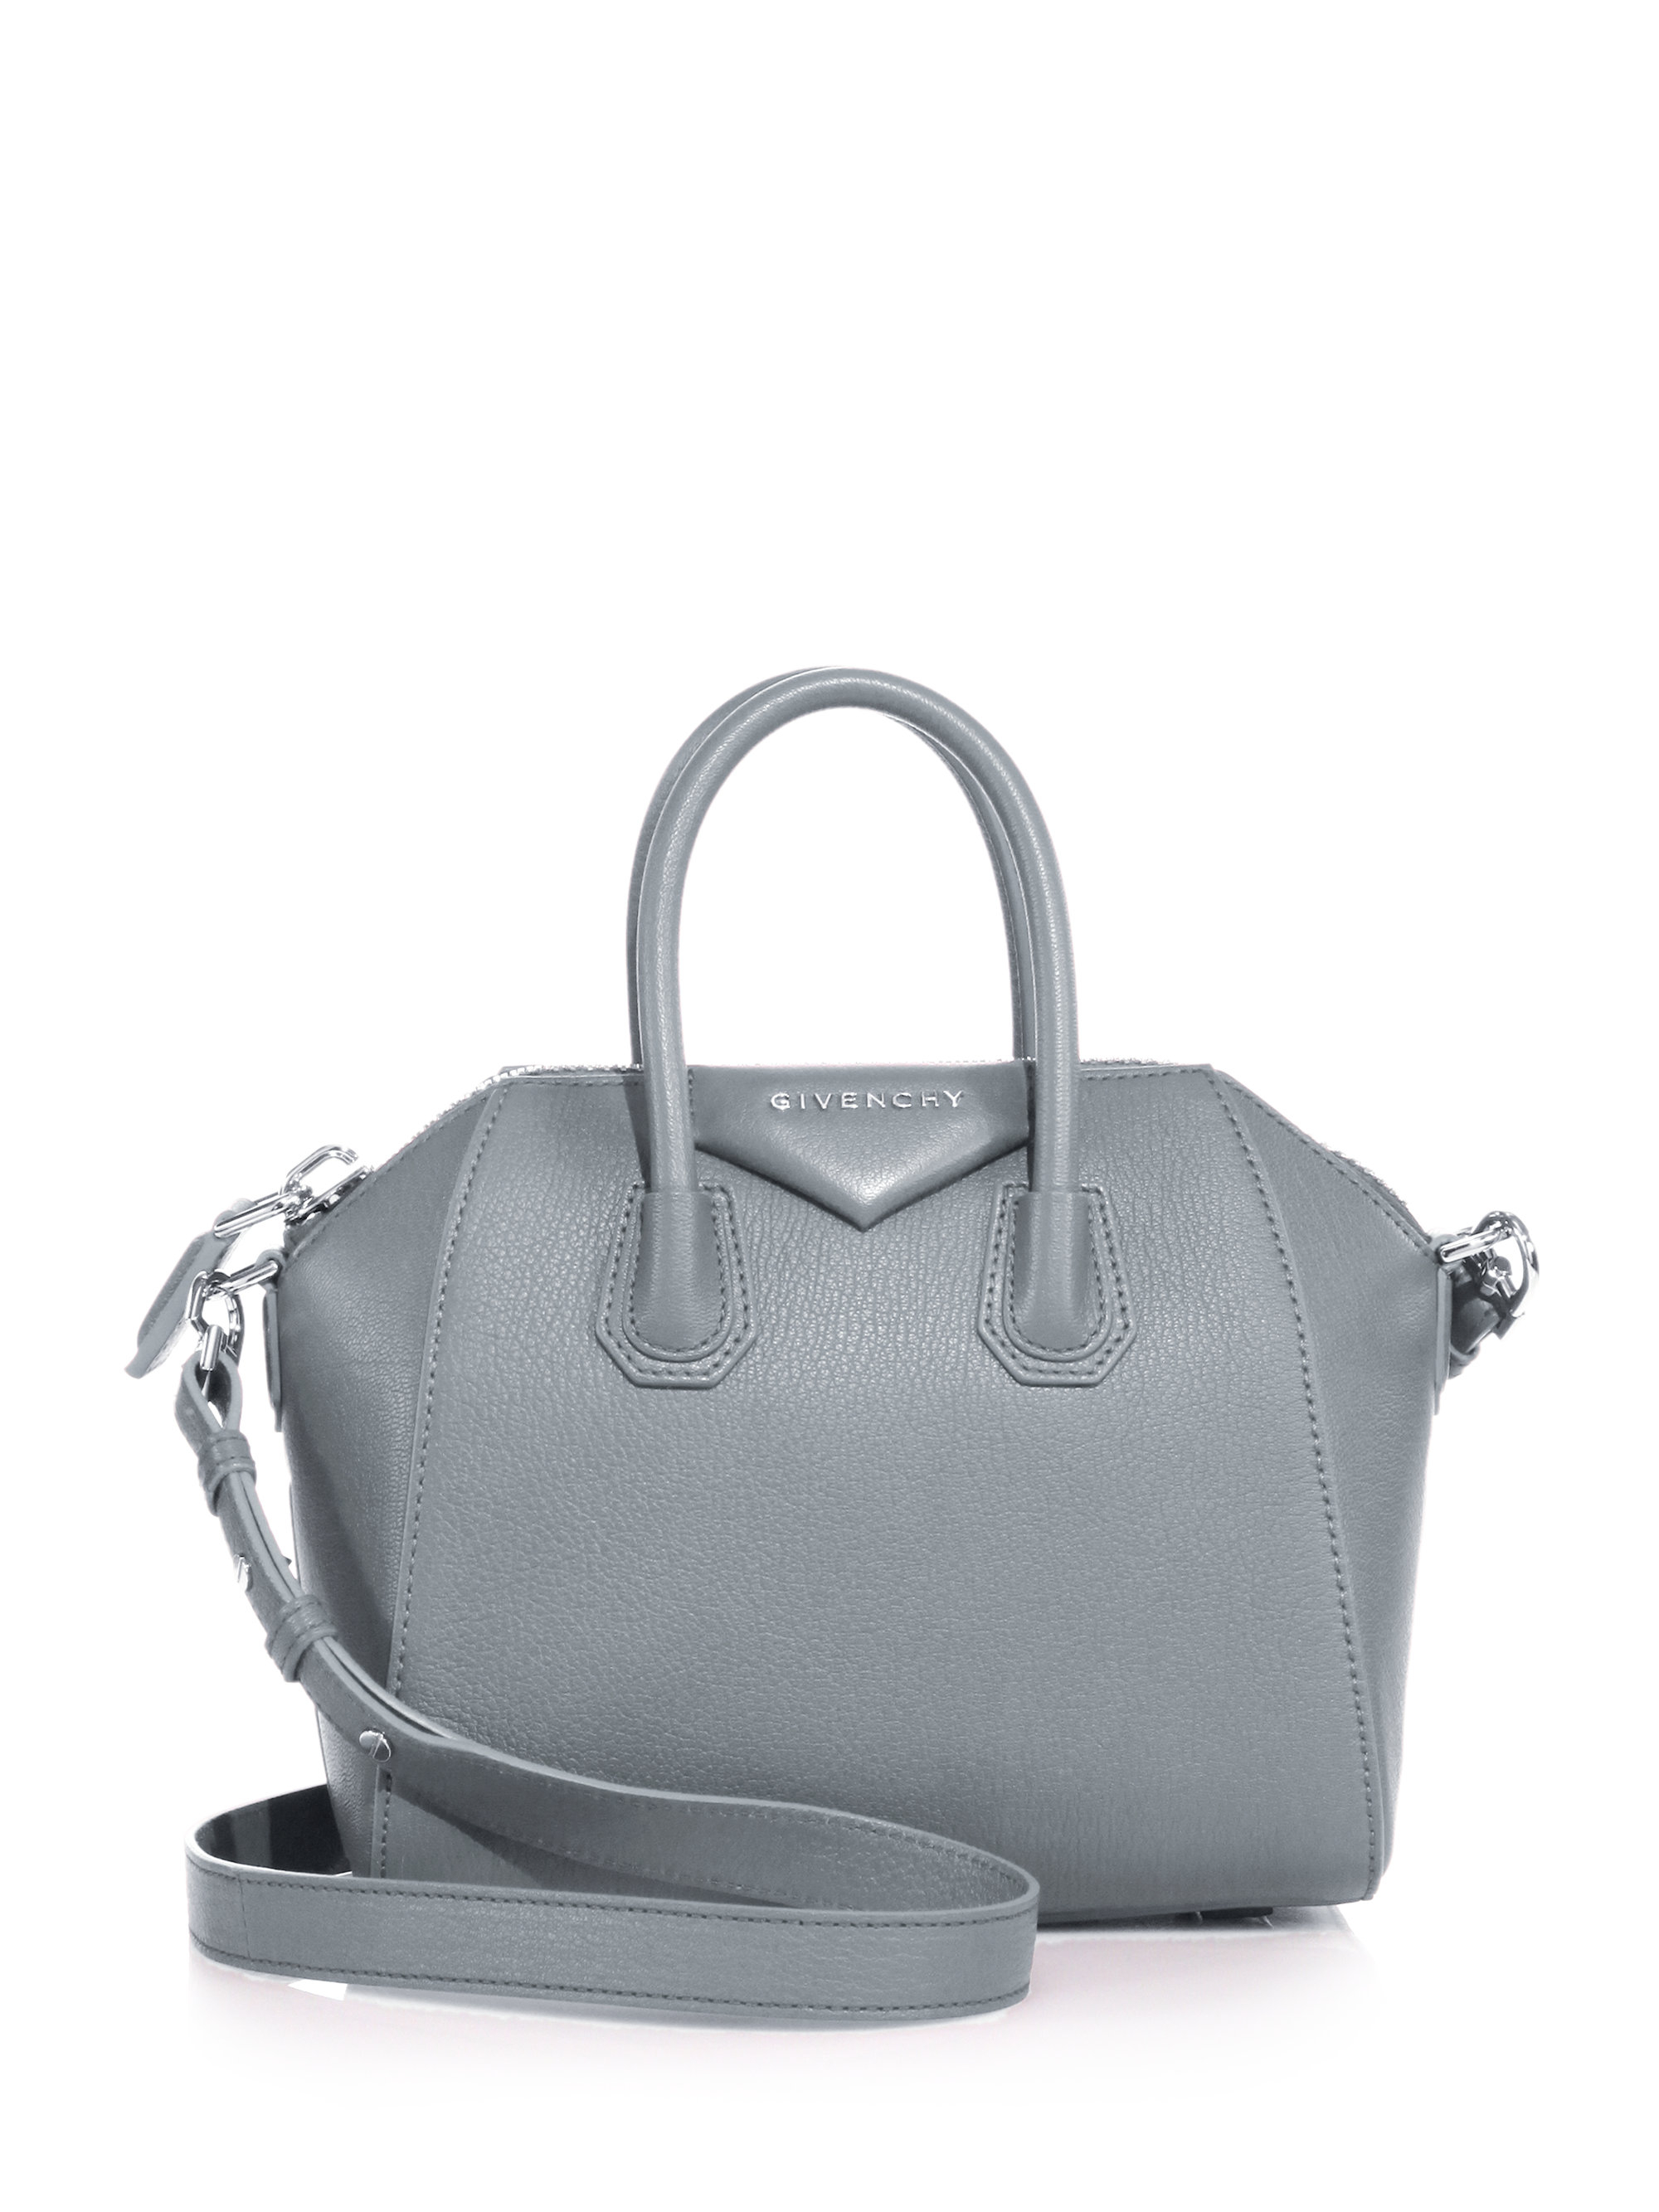 Givenchy Antigona Mini Leather Satchel in Gray | Lyst